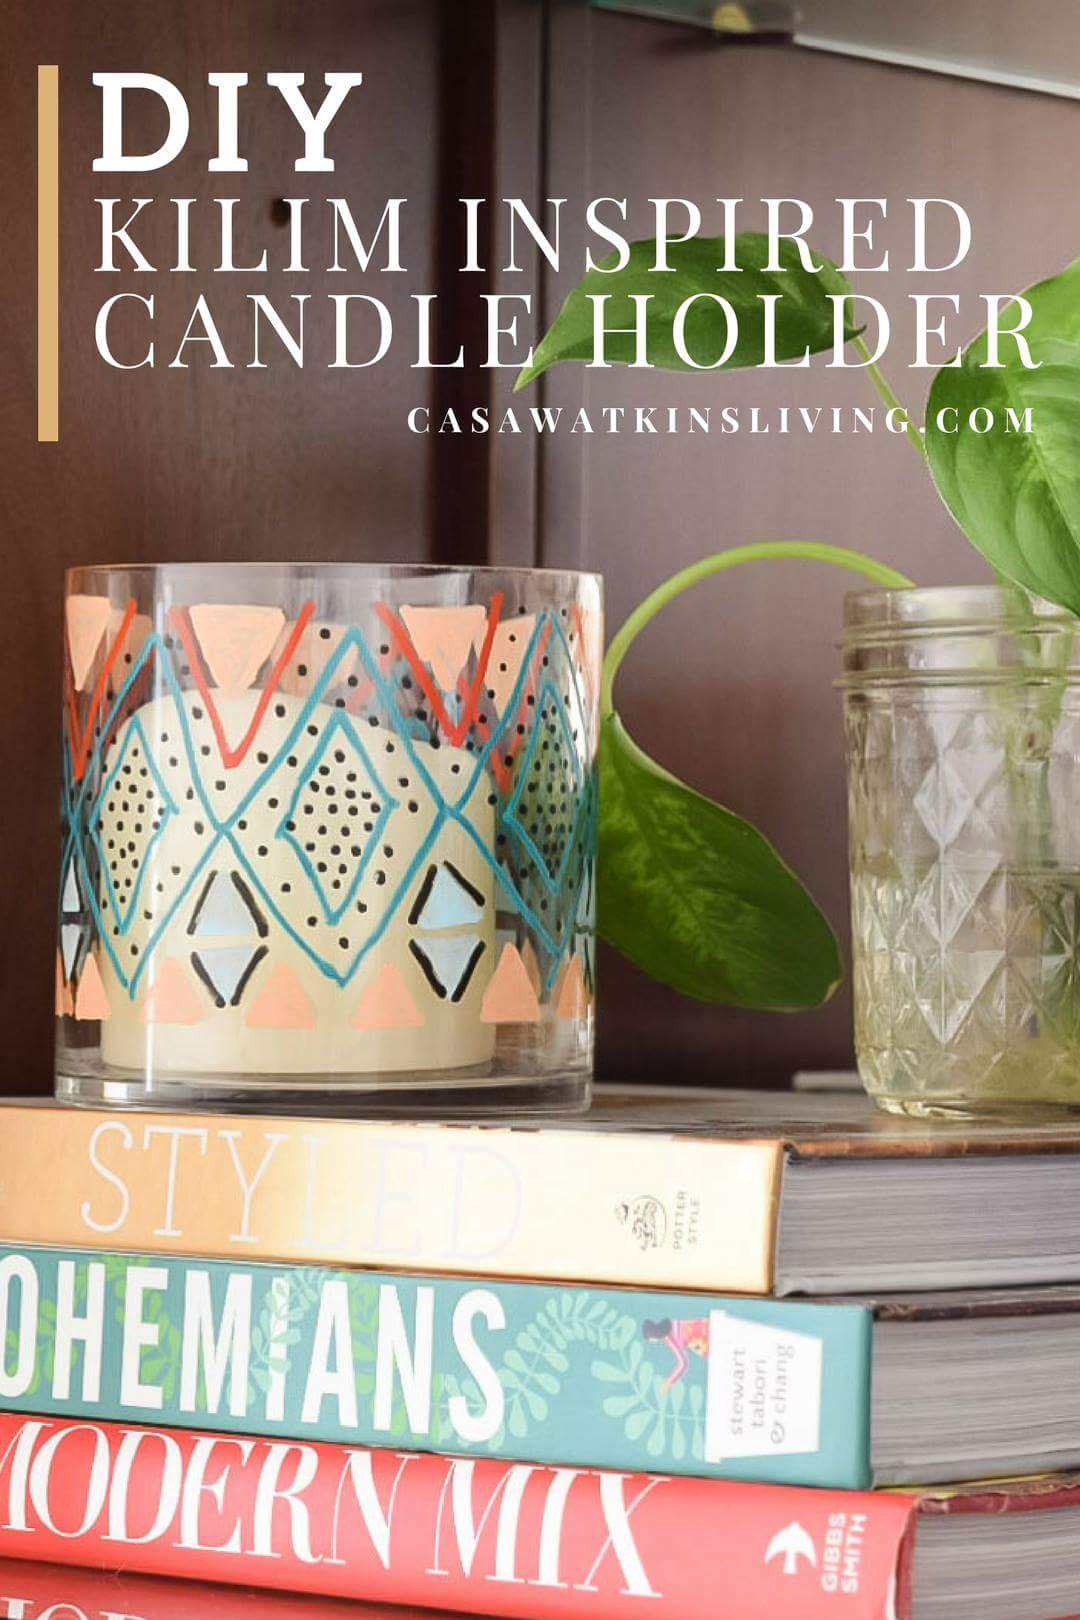 Kilim Inspired Candle Holder